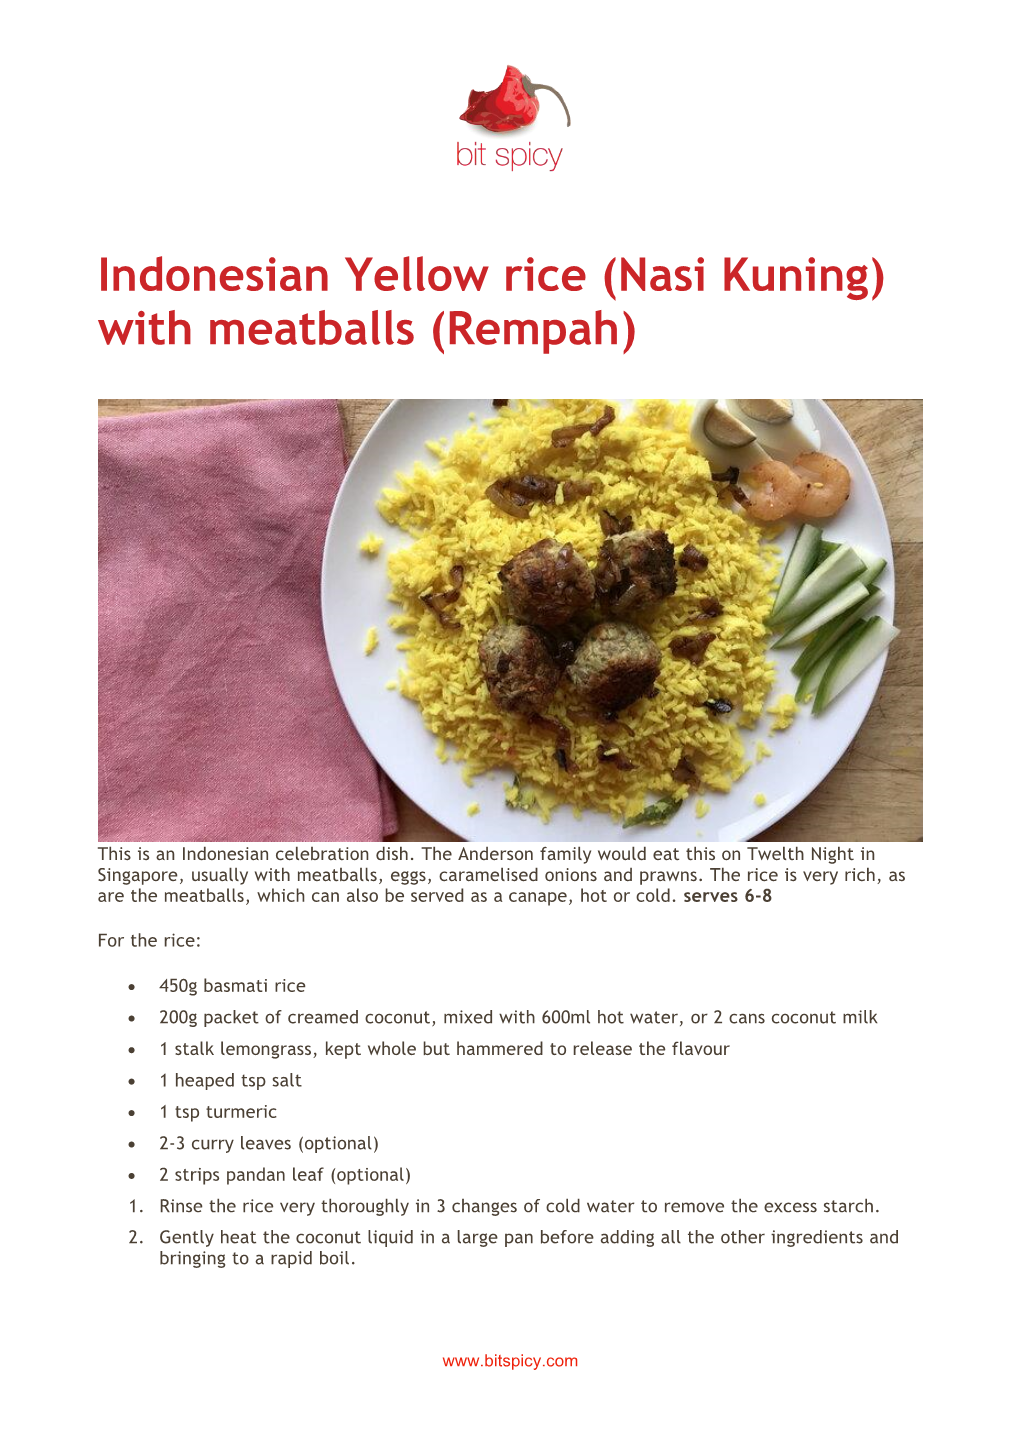 Indonesian Yellow Rice (Nasi Kuning) with Meatballs (Rempah)